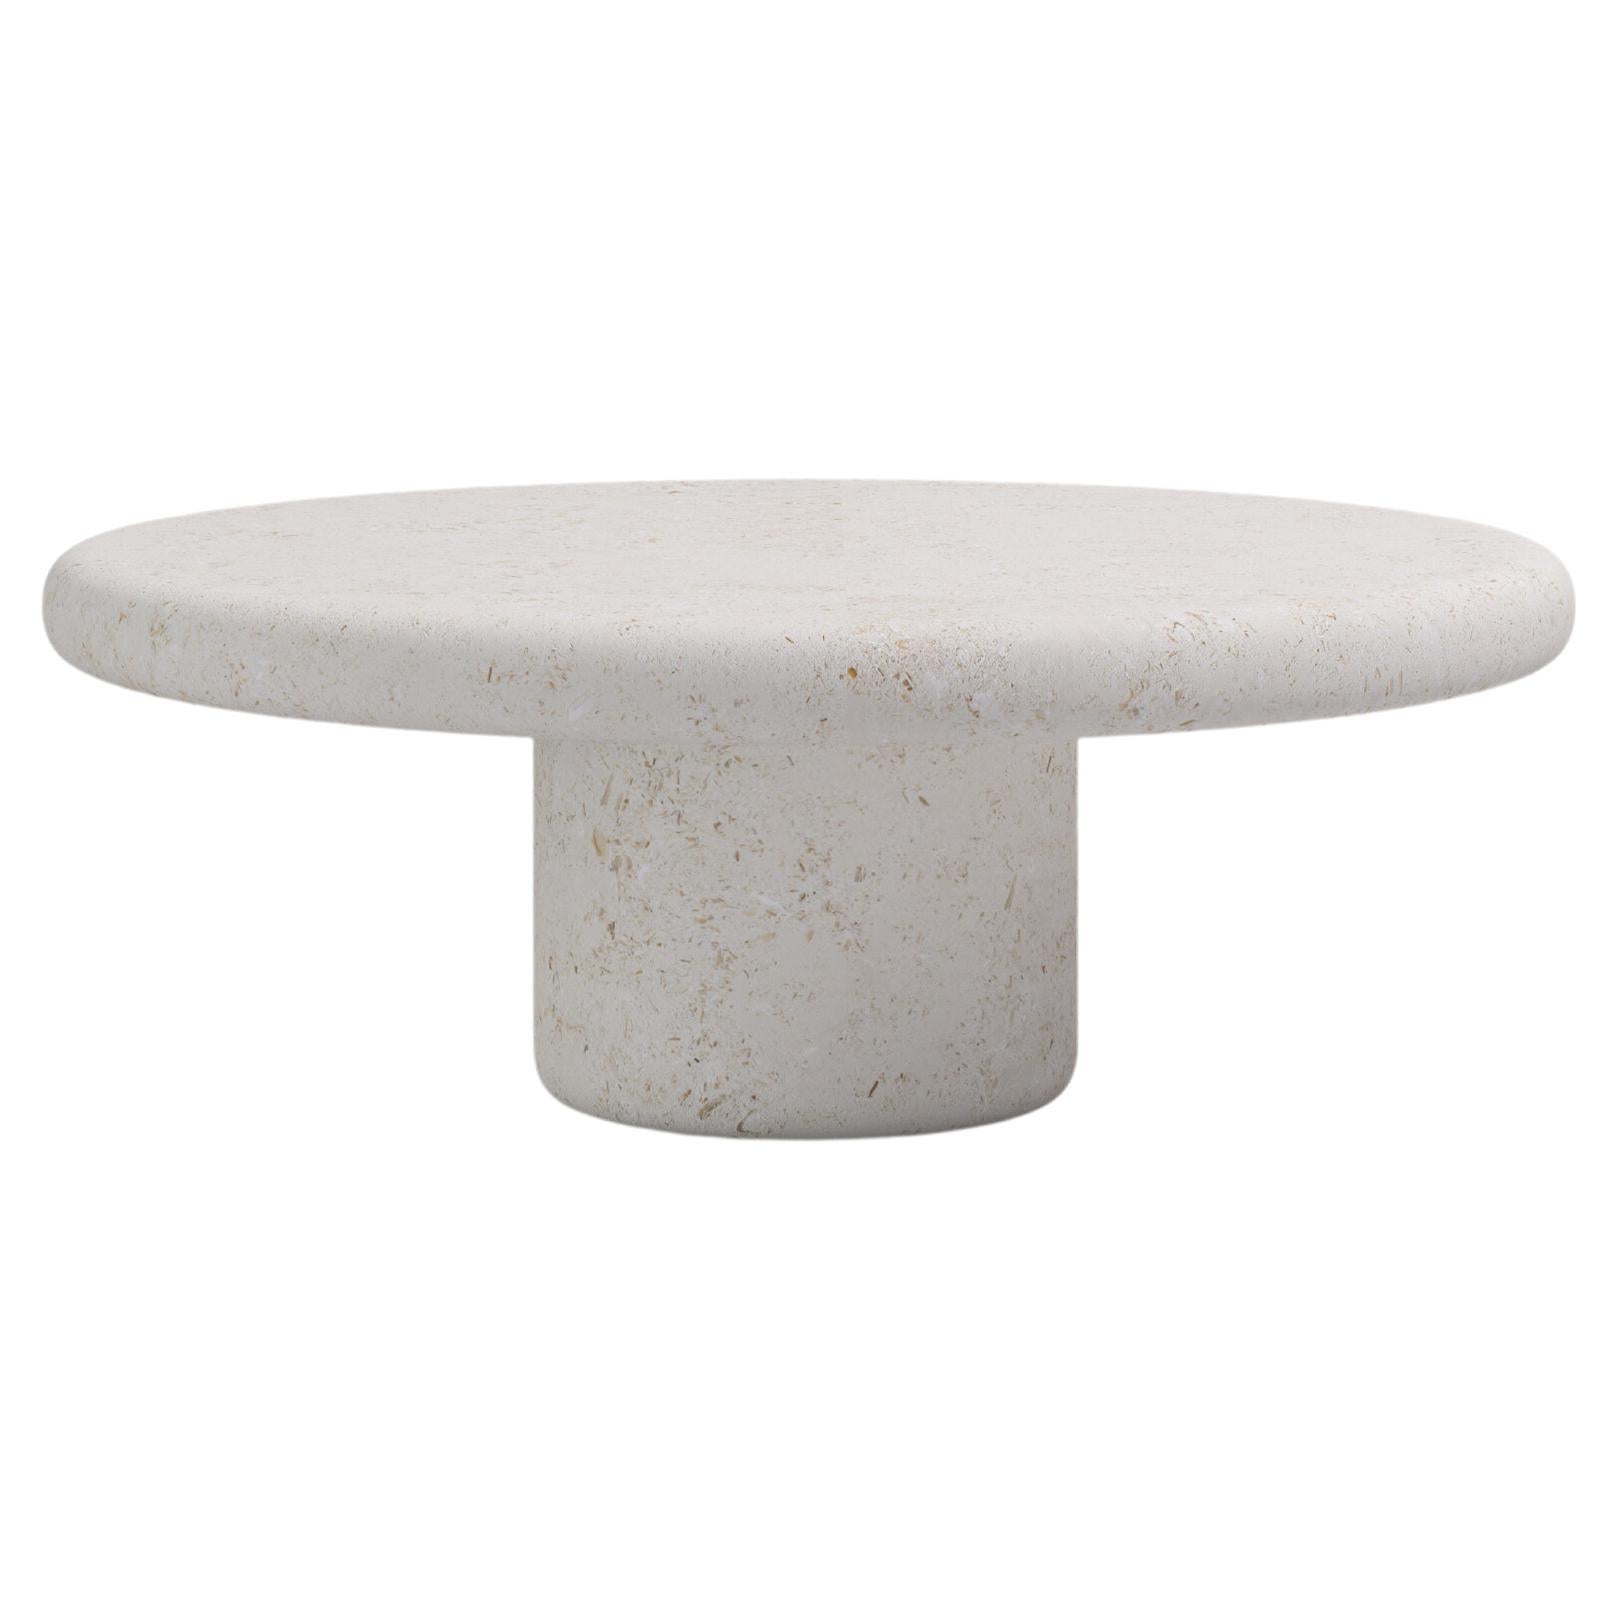 FORM(LA) Luna Round Coffee Table 48”L x 48”W x 15”H Limestone Oceano For Sale